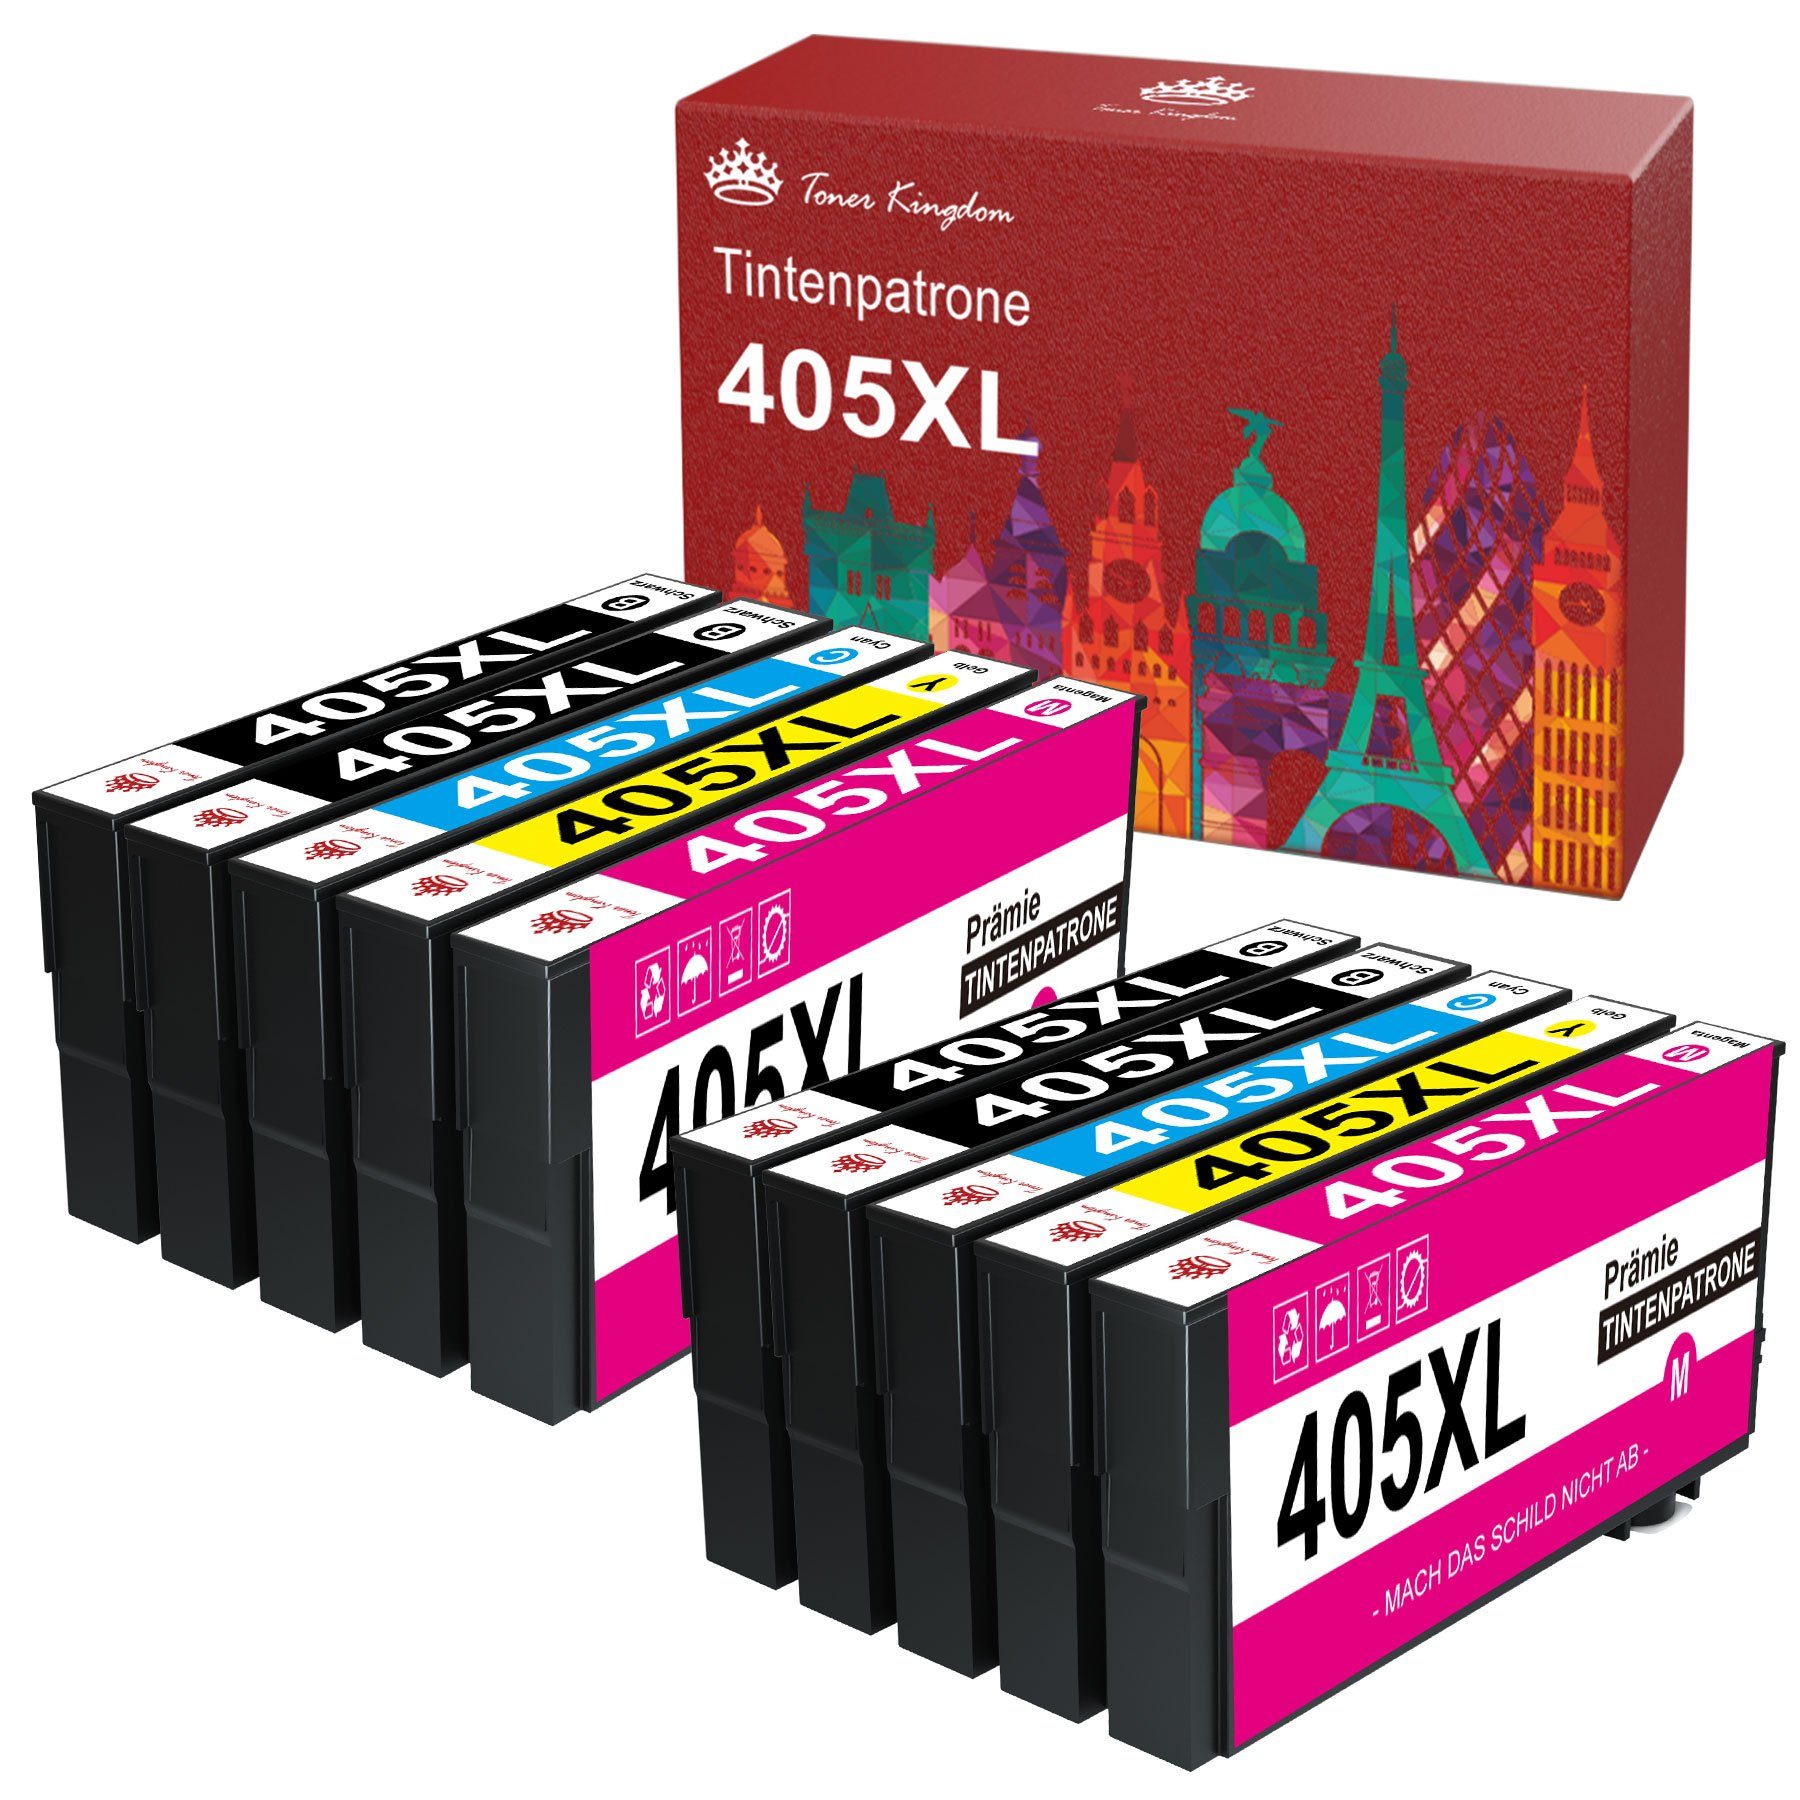 Tintenpatrone Toner set 405 Kingdom EPSON 3820, 10er WF-4830 4825 (Pro XL 405XL für 0-tlg) Multipack